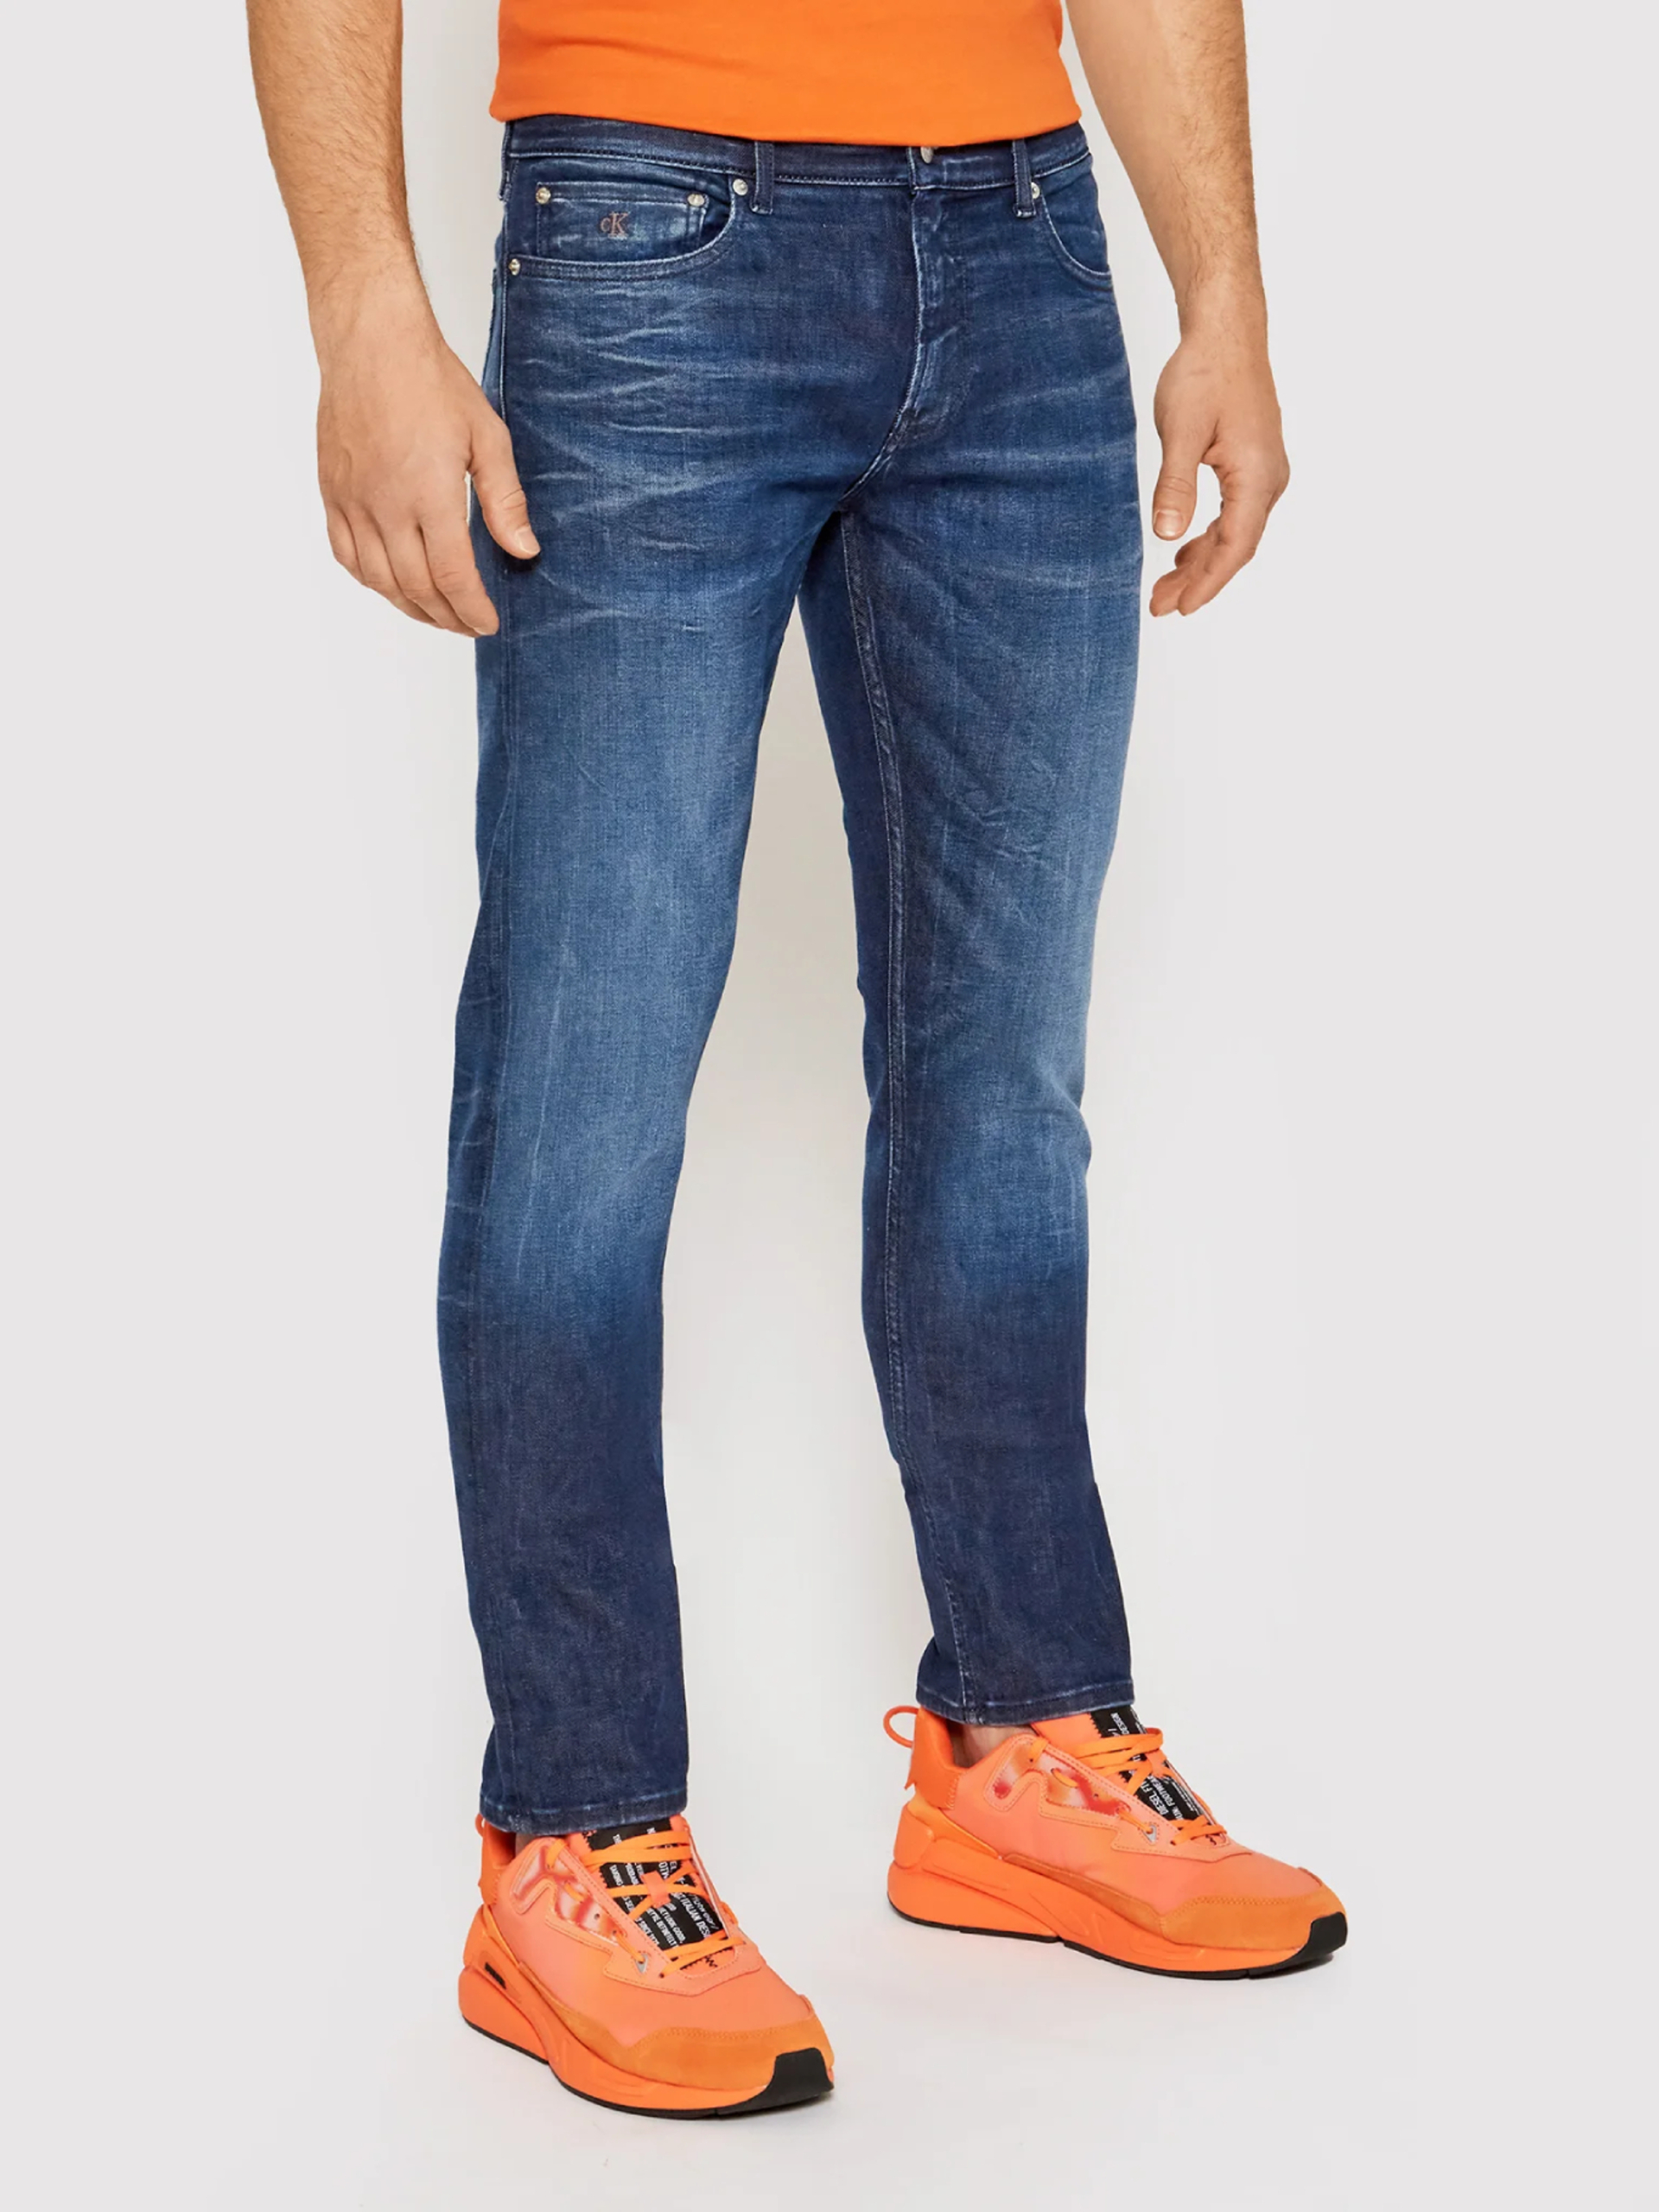 Calvin Klein pánské tmavě modré džíny - 33/30 (1BJ)